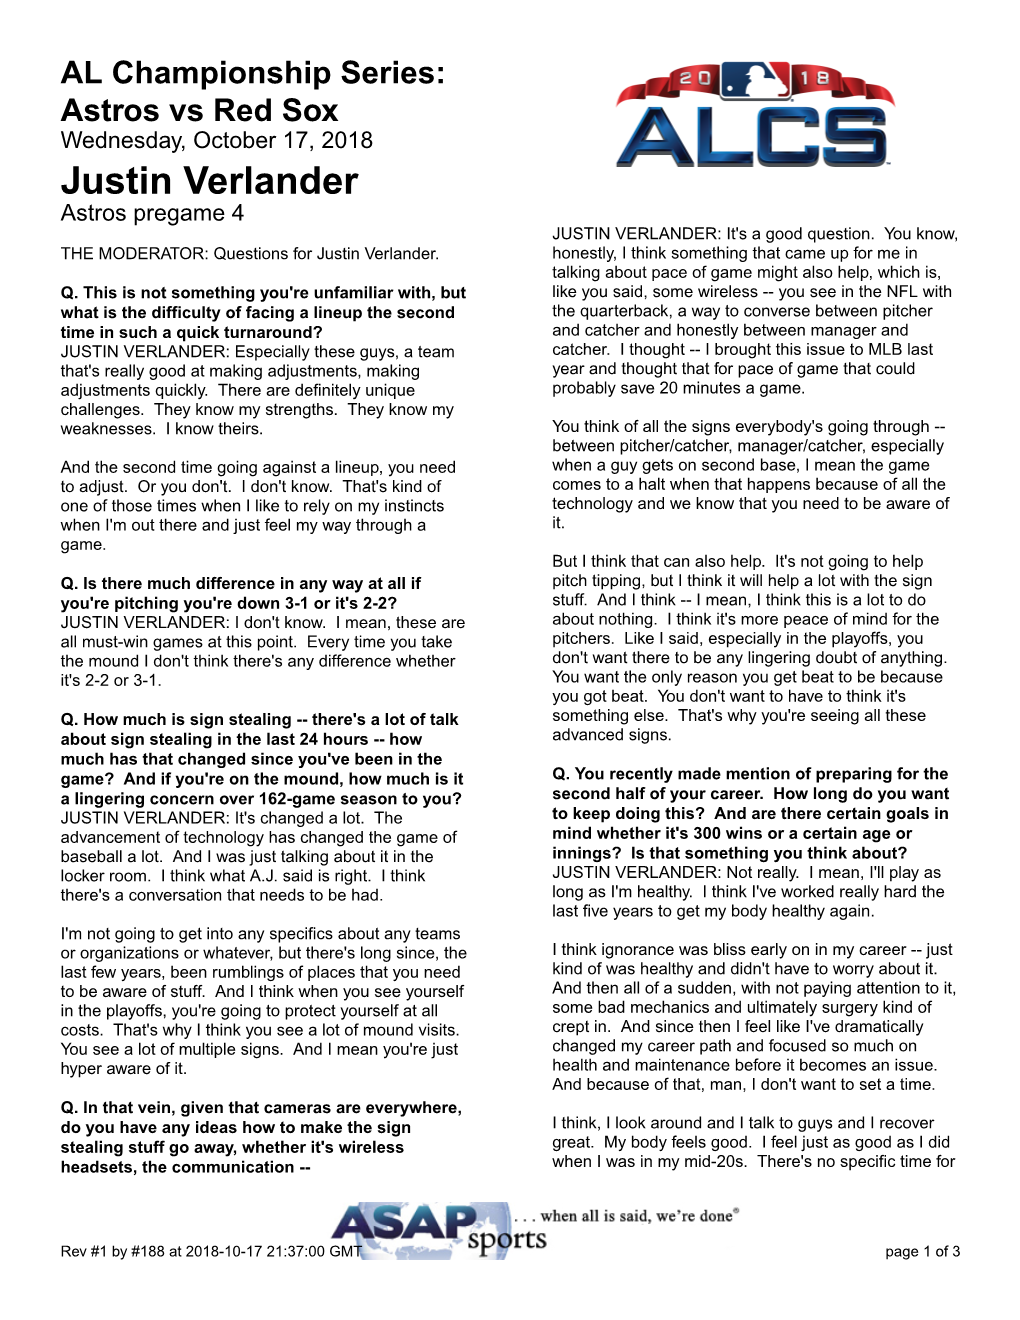 Justin Verlander Astros Pregame 4 JUSTIN VERLANDER: It's a Good Question